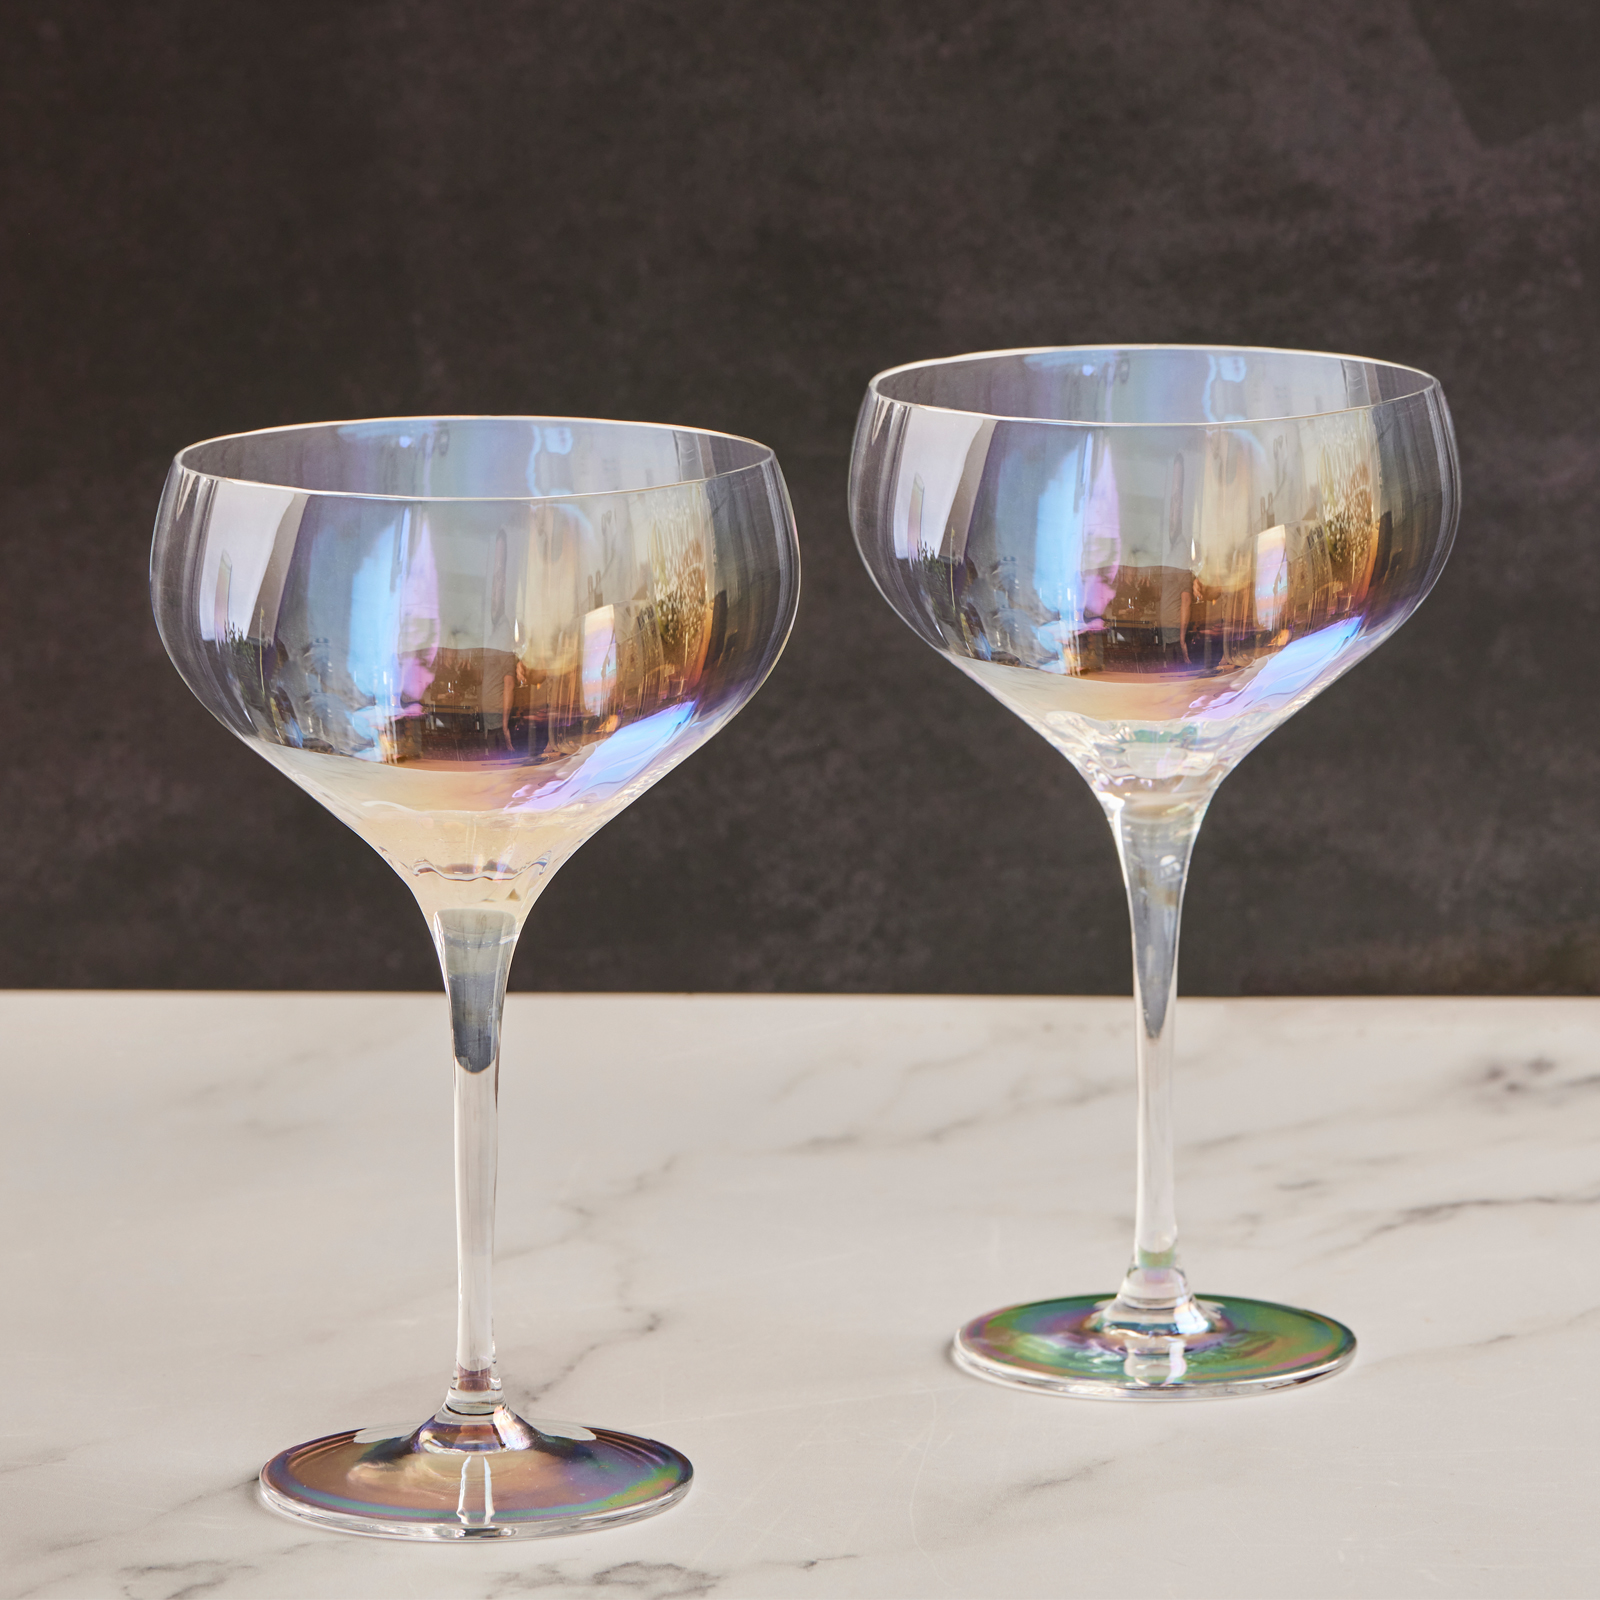 Set of 2 Palazzo Wine Glasses